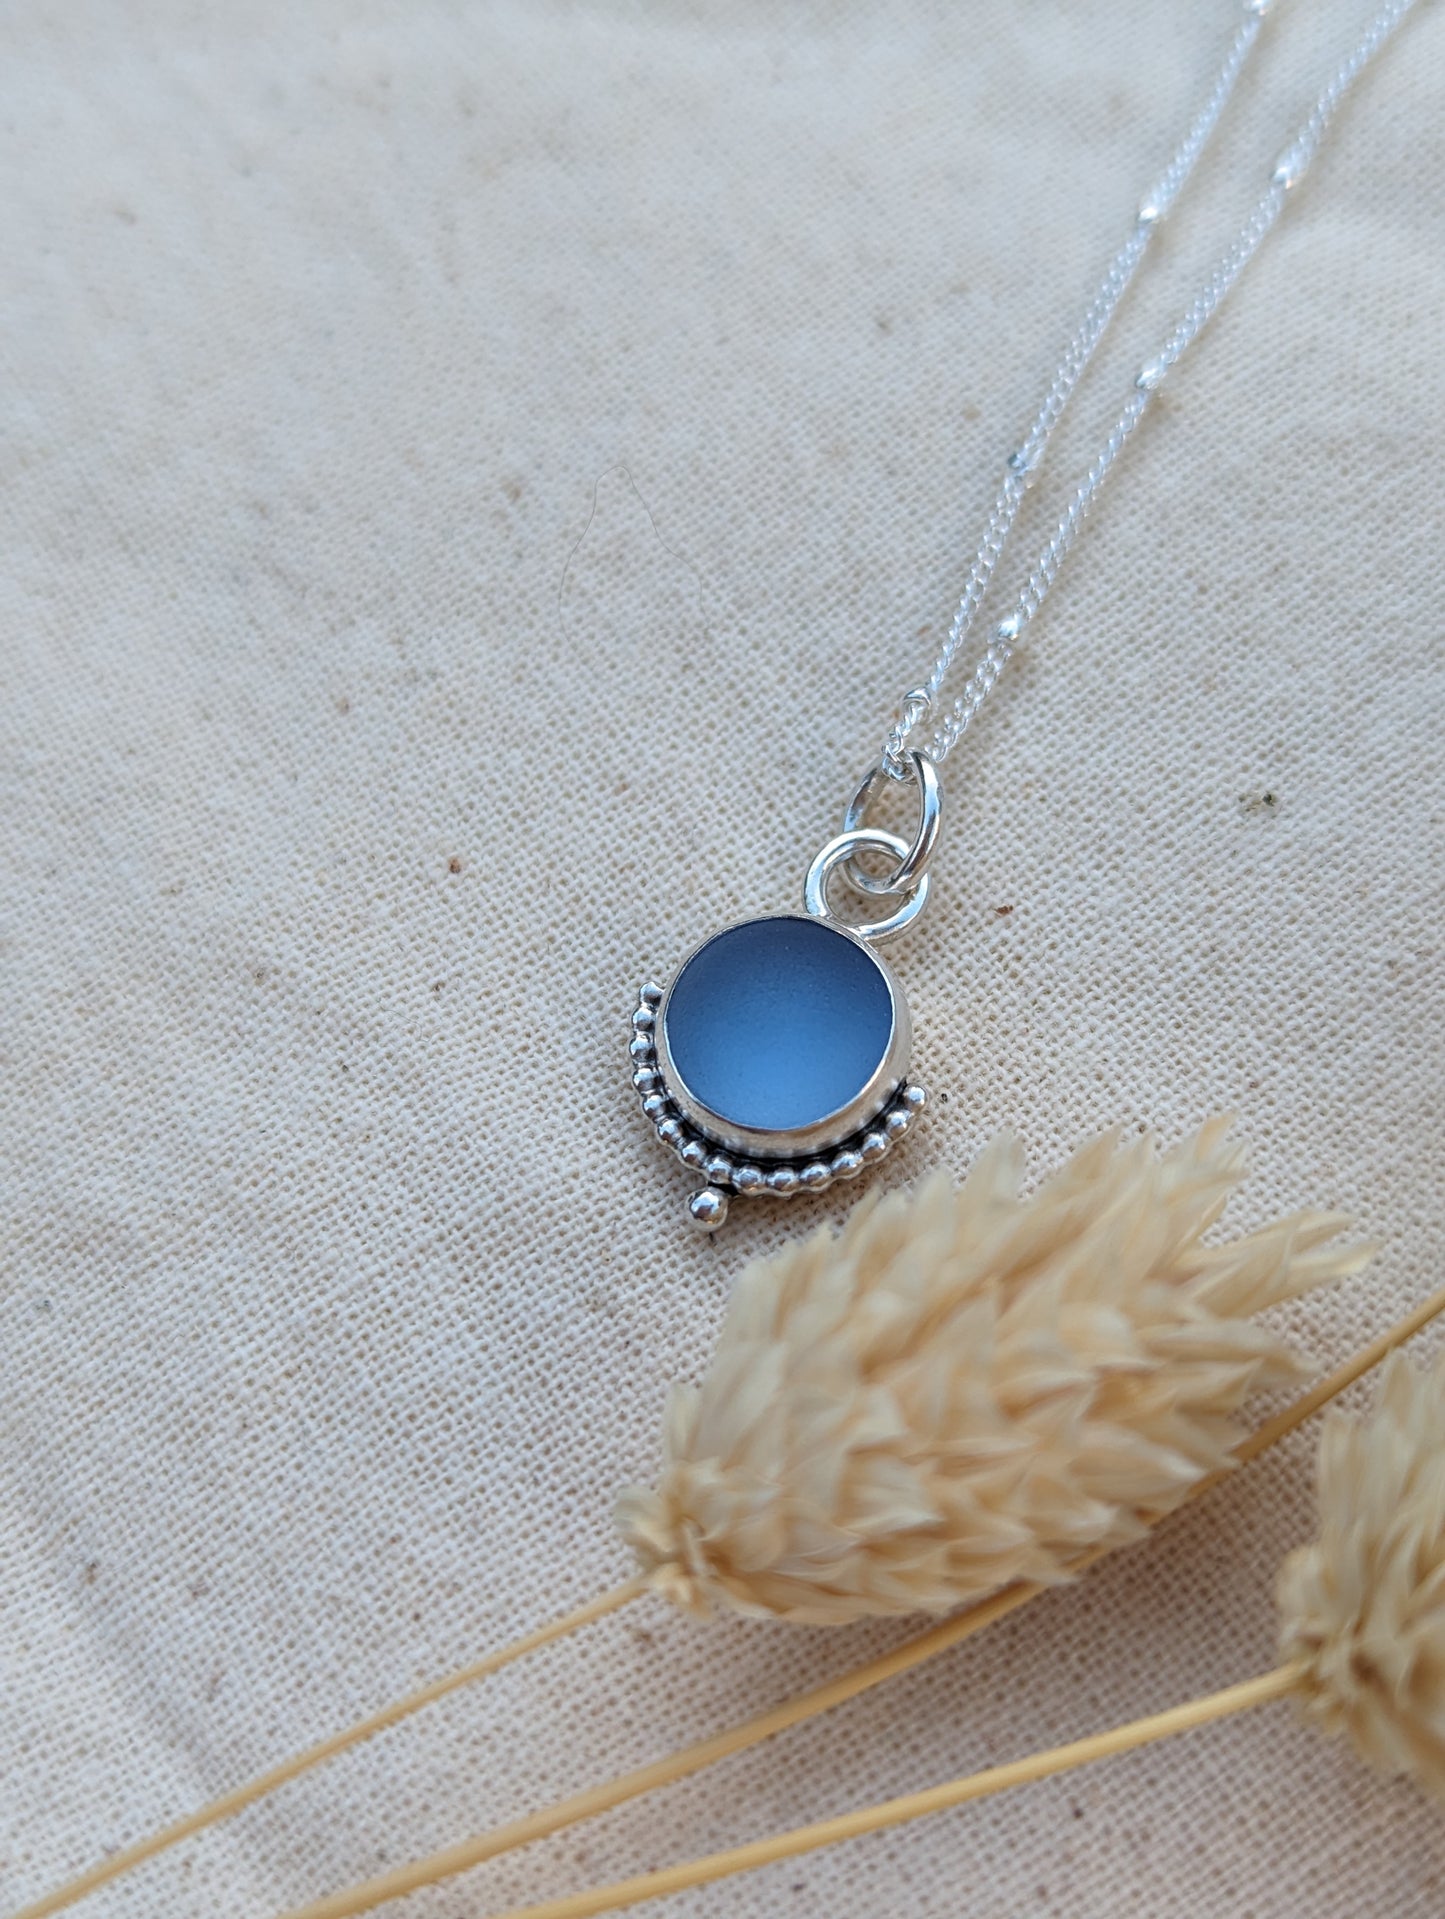 Cornflower blue seaglass necklace